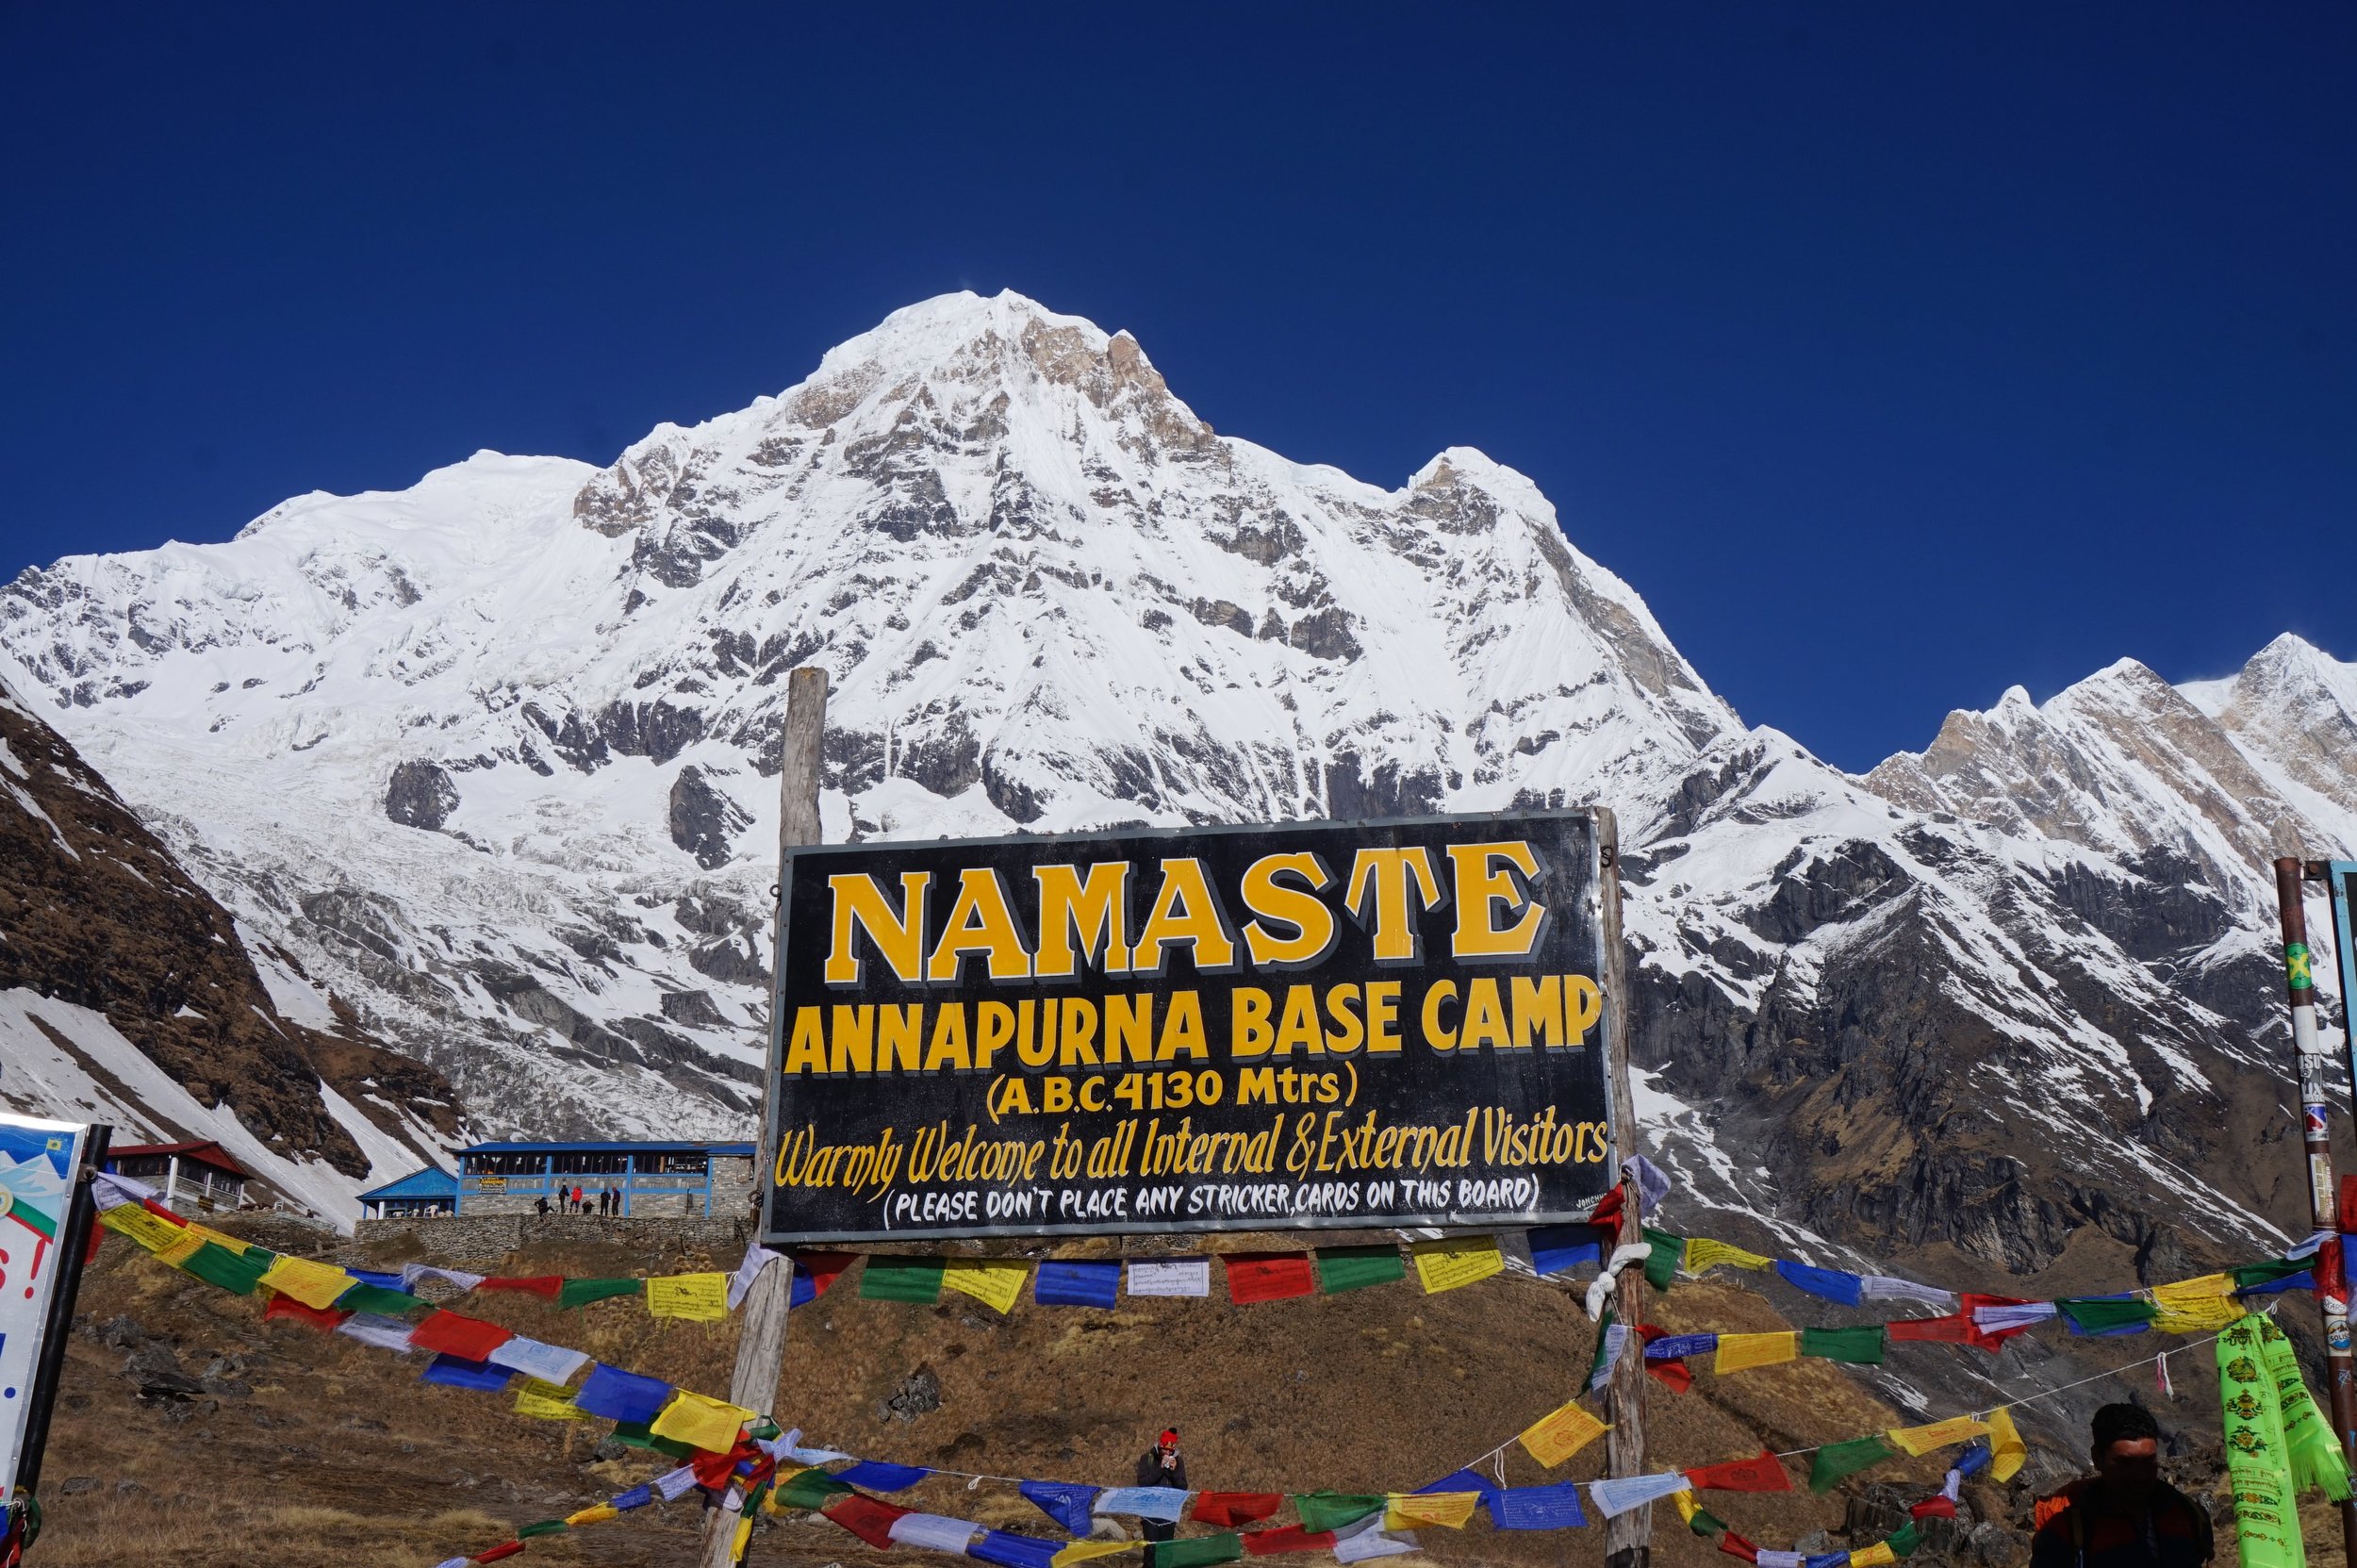 My travel to Annapurna Base Camp